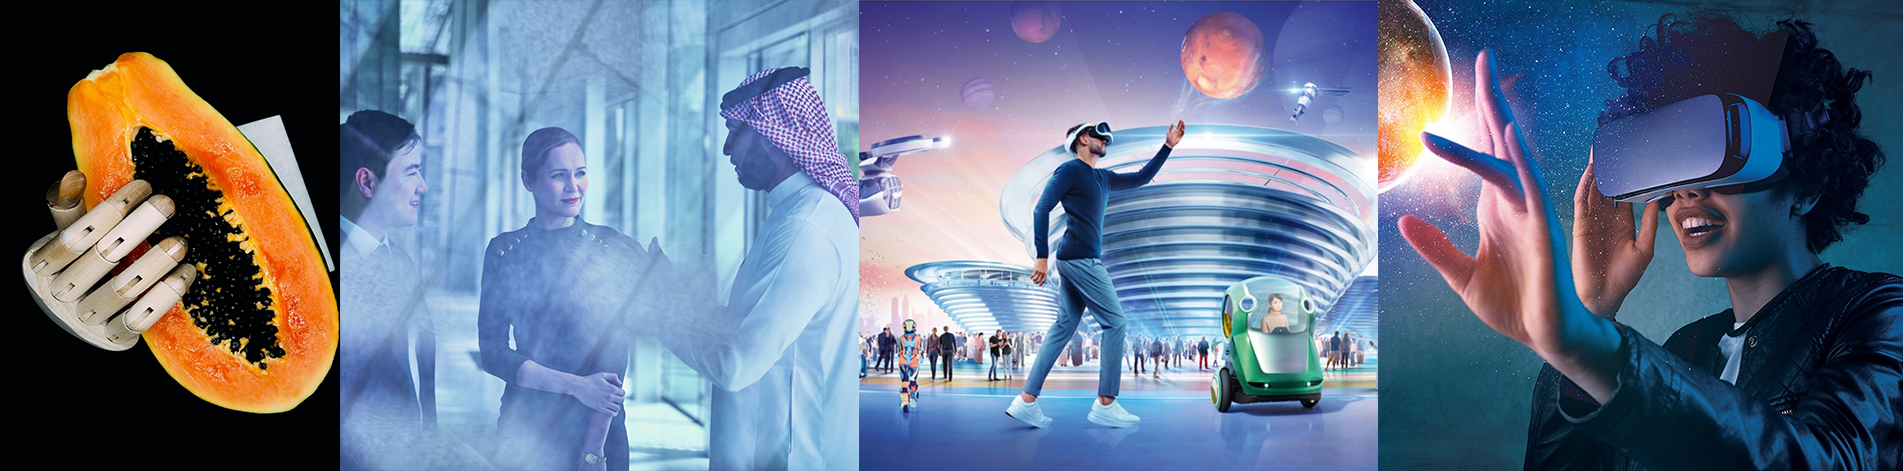 Expo 2020 Dubai - United Arab Emirates